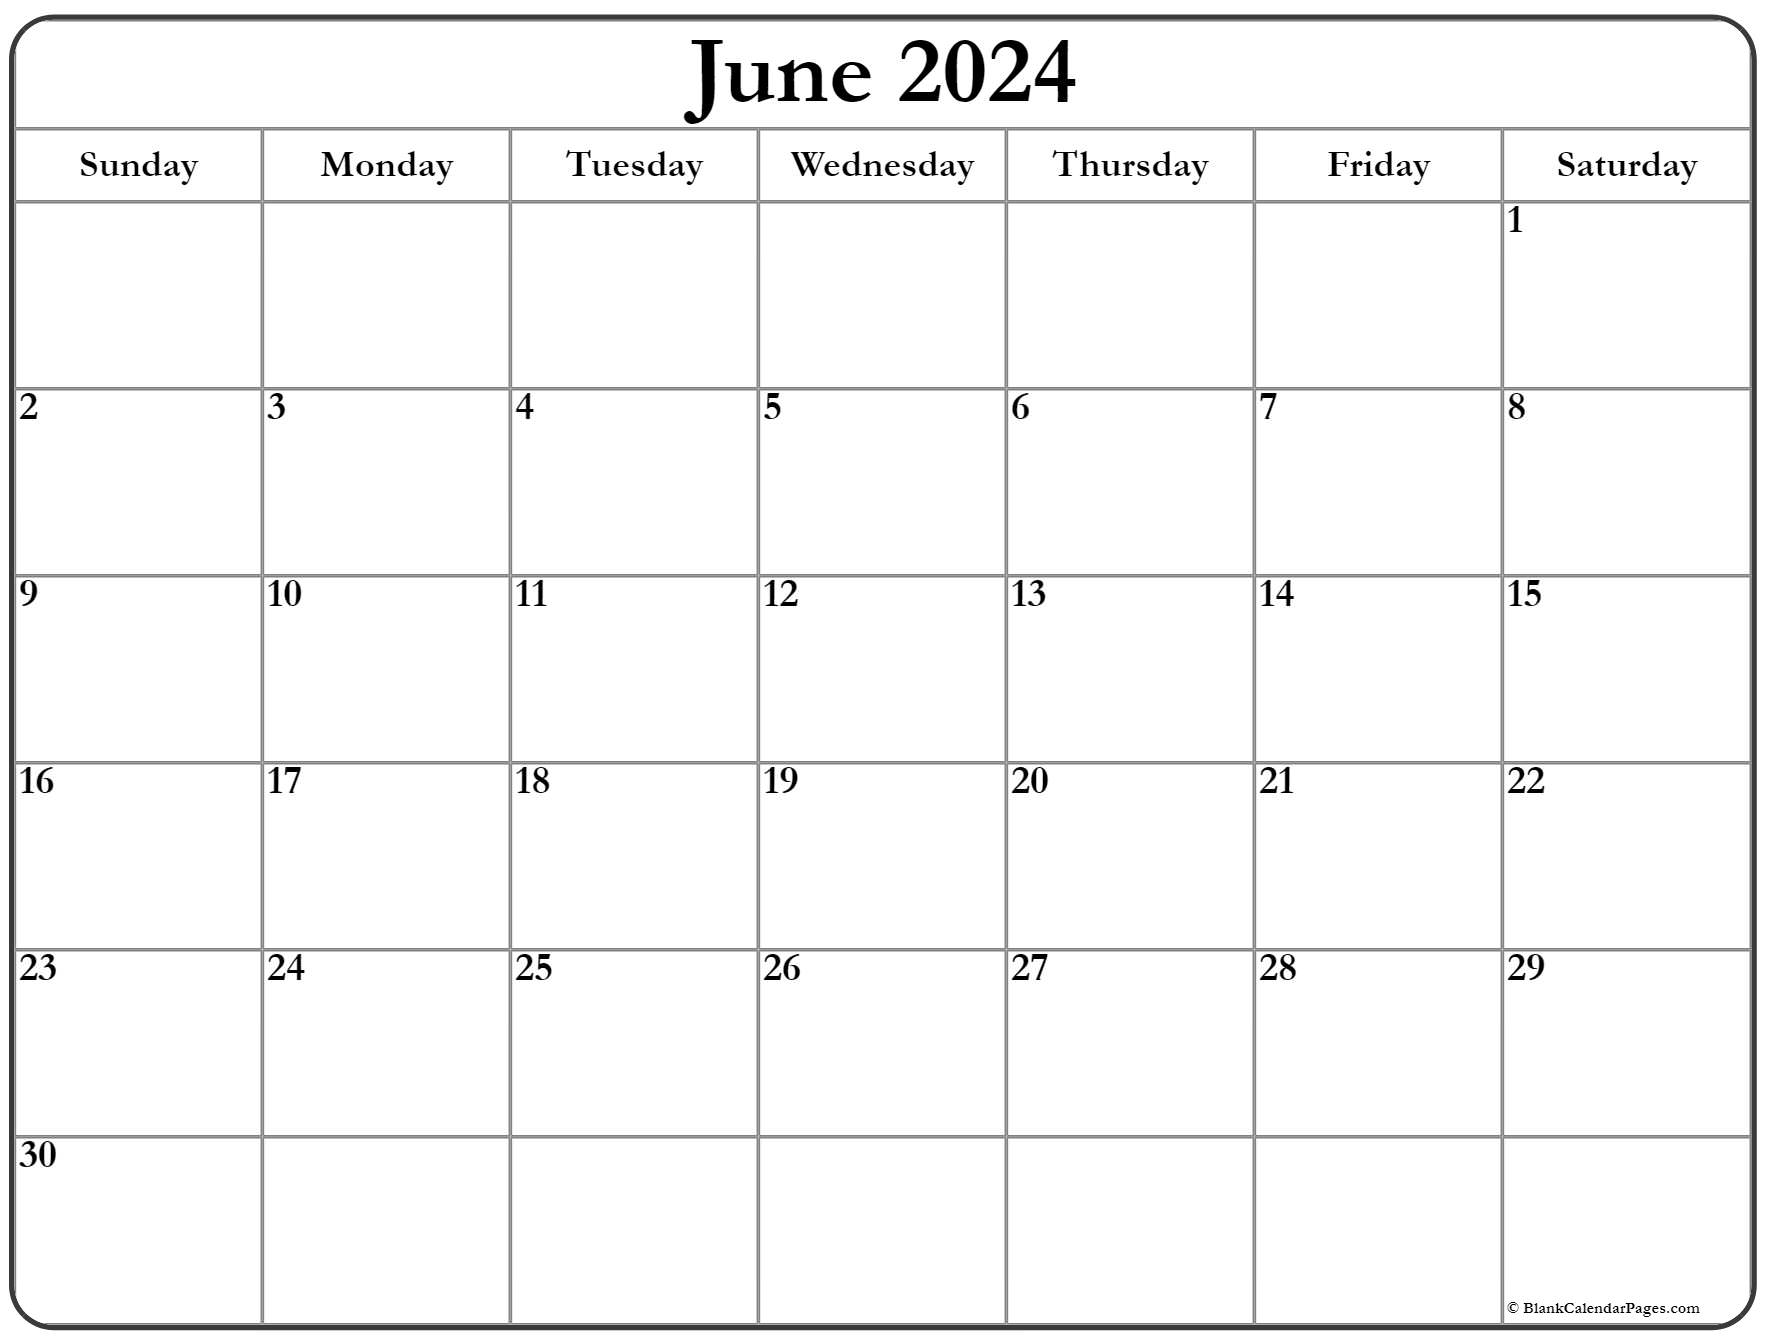 June 2024 Printable Calendar prntbl.concejomunicipaldechinu.gov.co